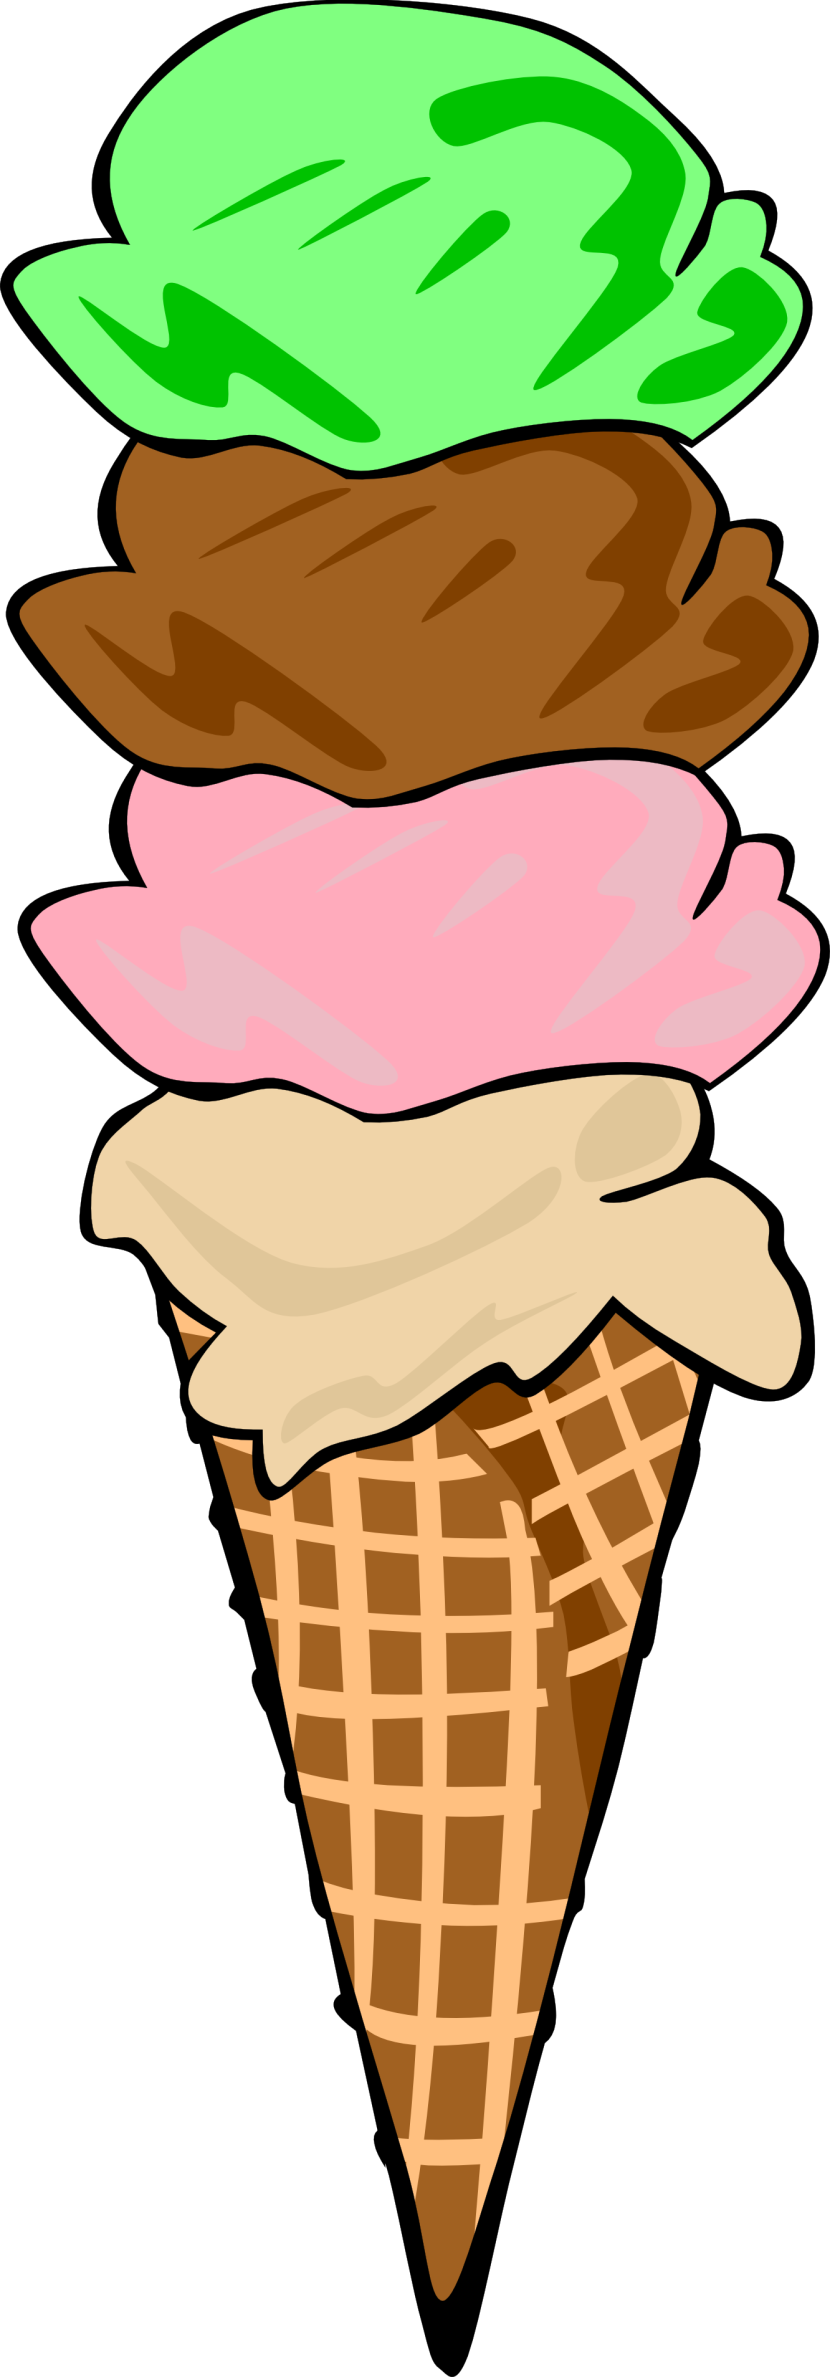 Cool Ice Cream Cone Clipart Images